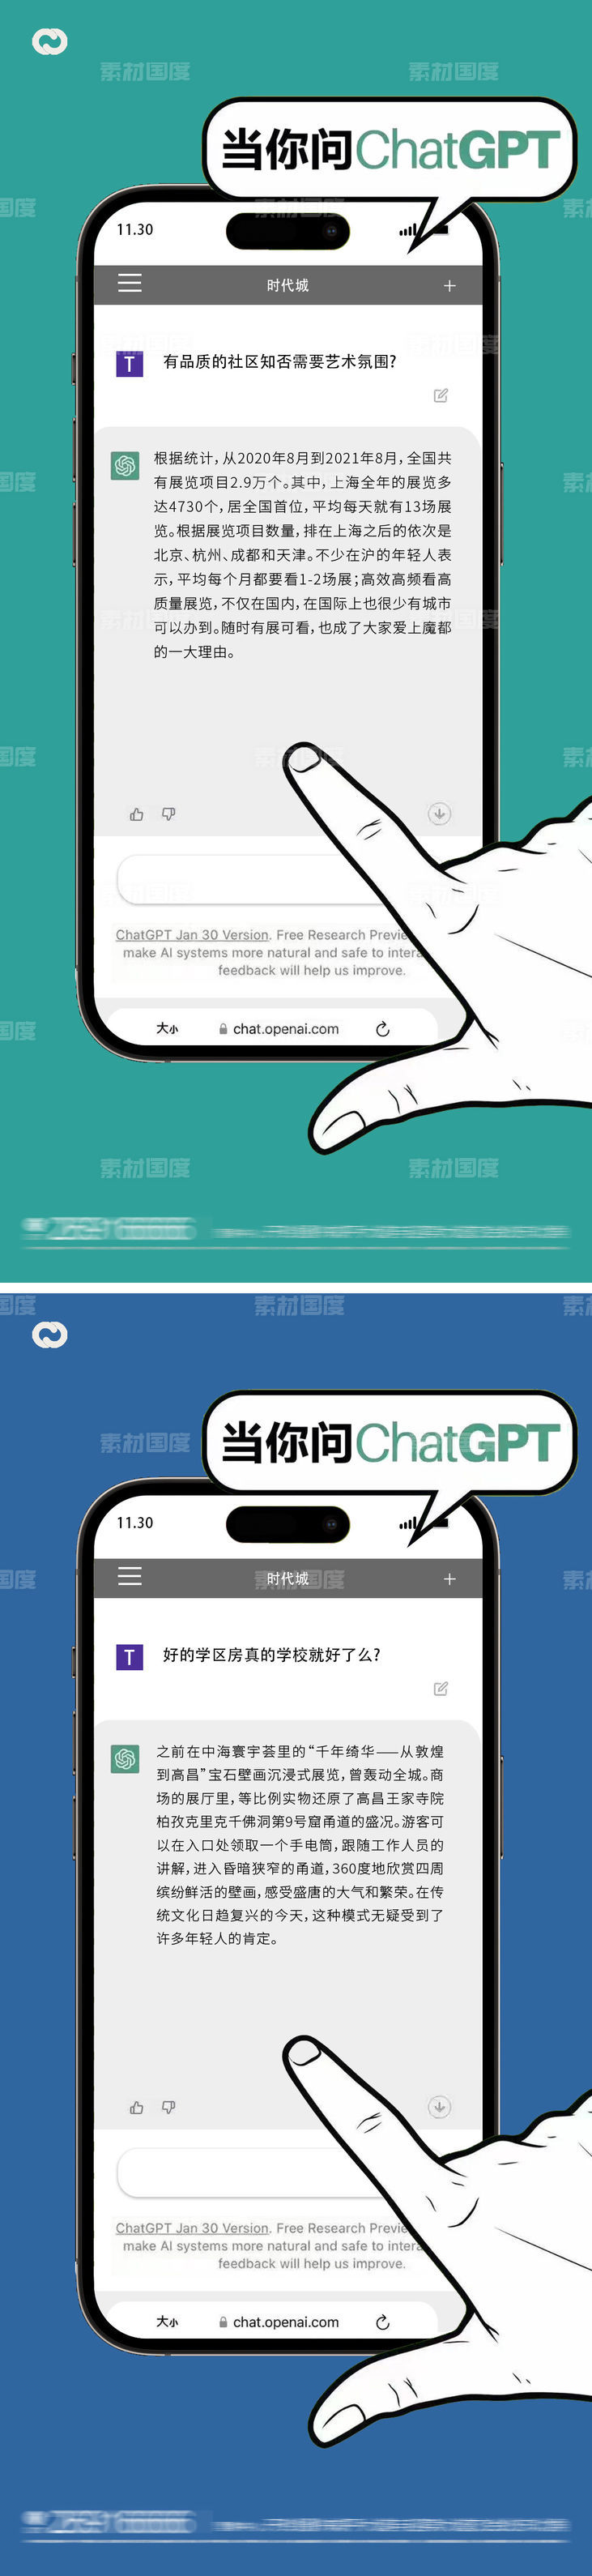 chatGPT地产买房热点海报